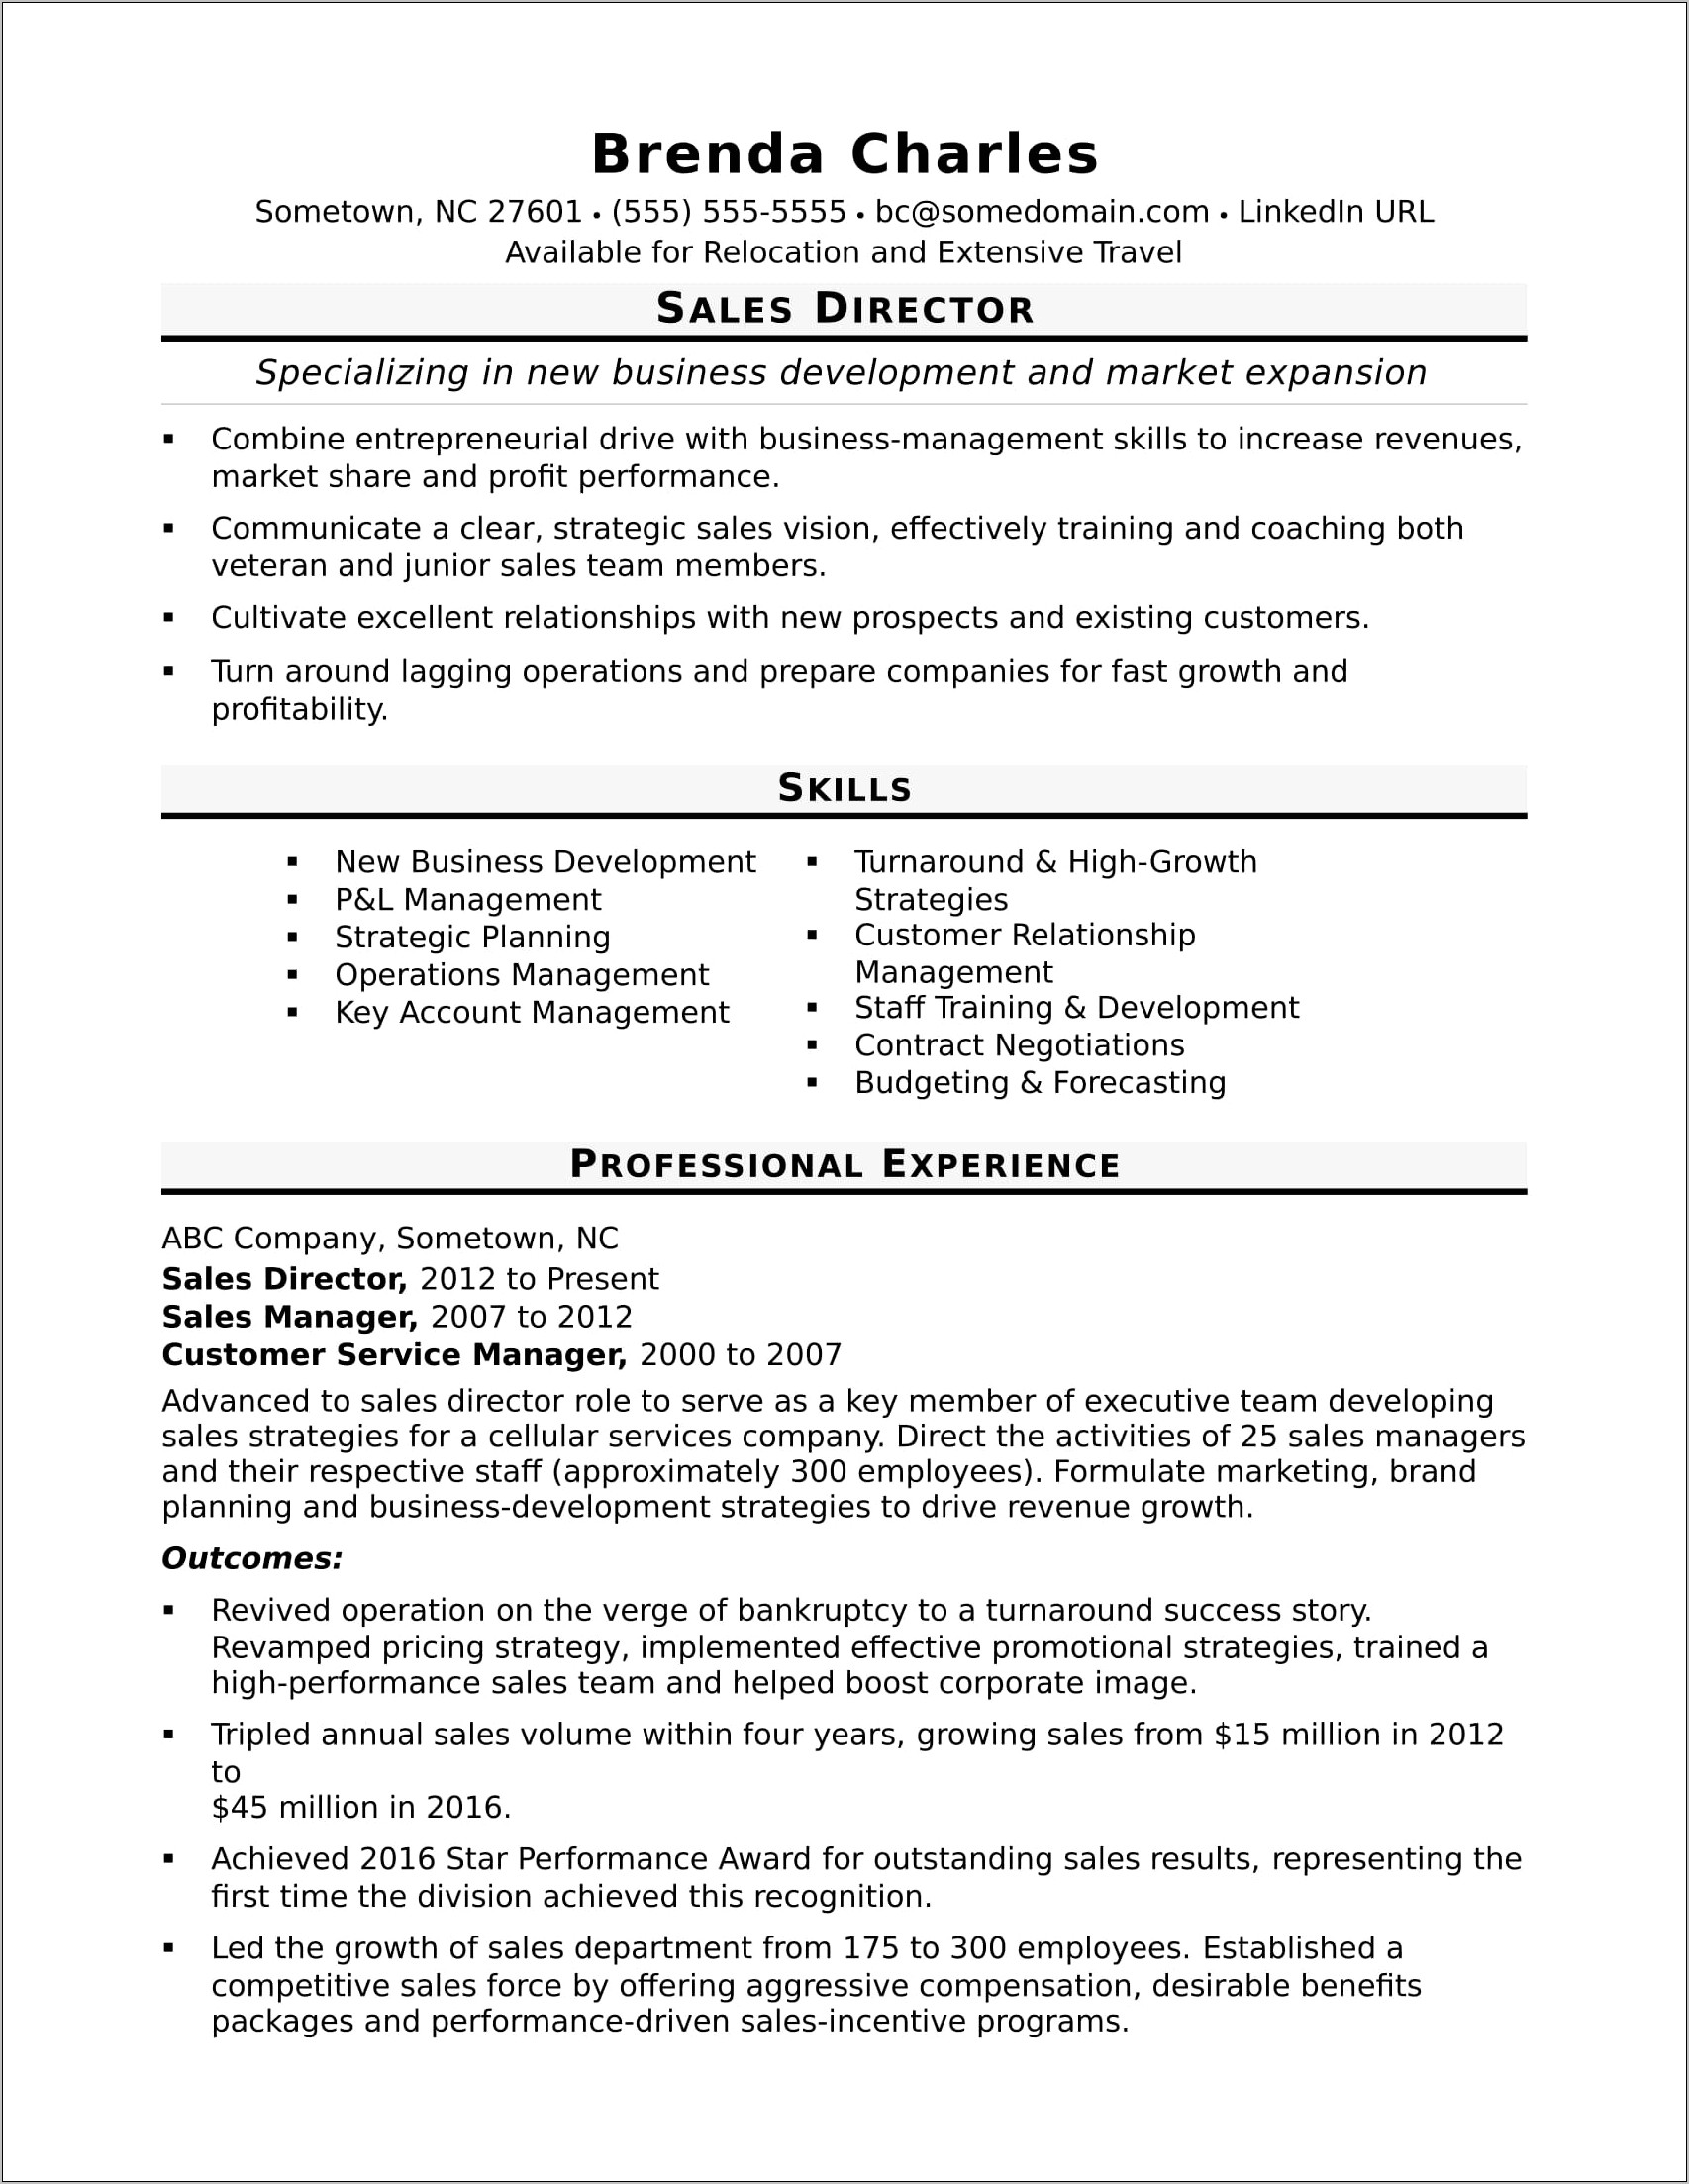 Brand Representative Job Description Resume